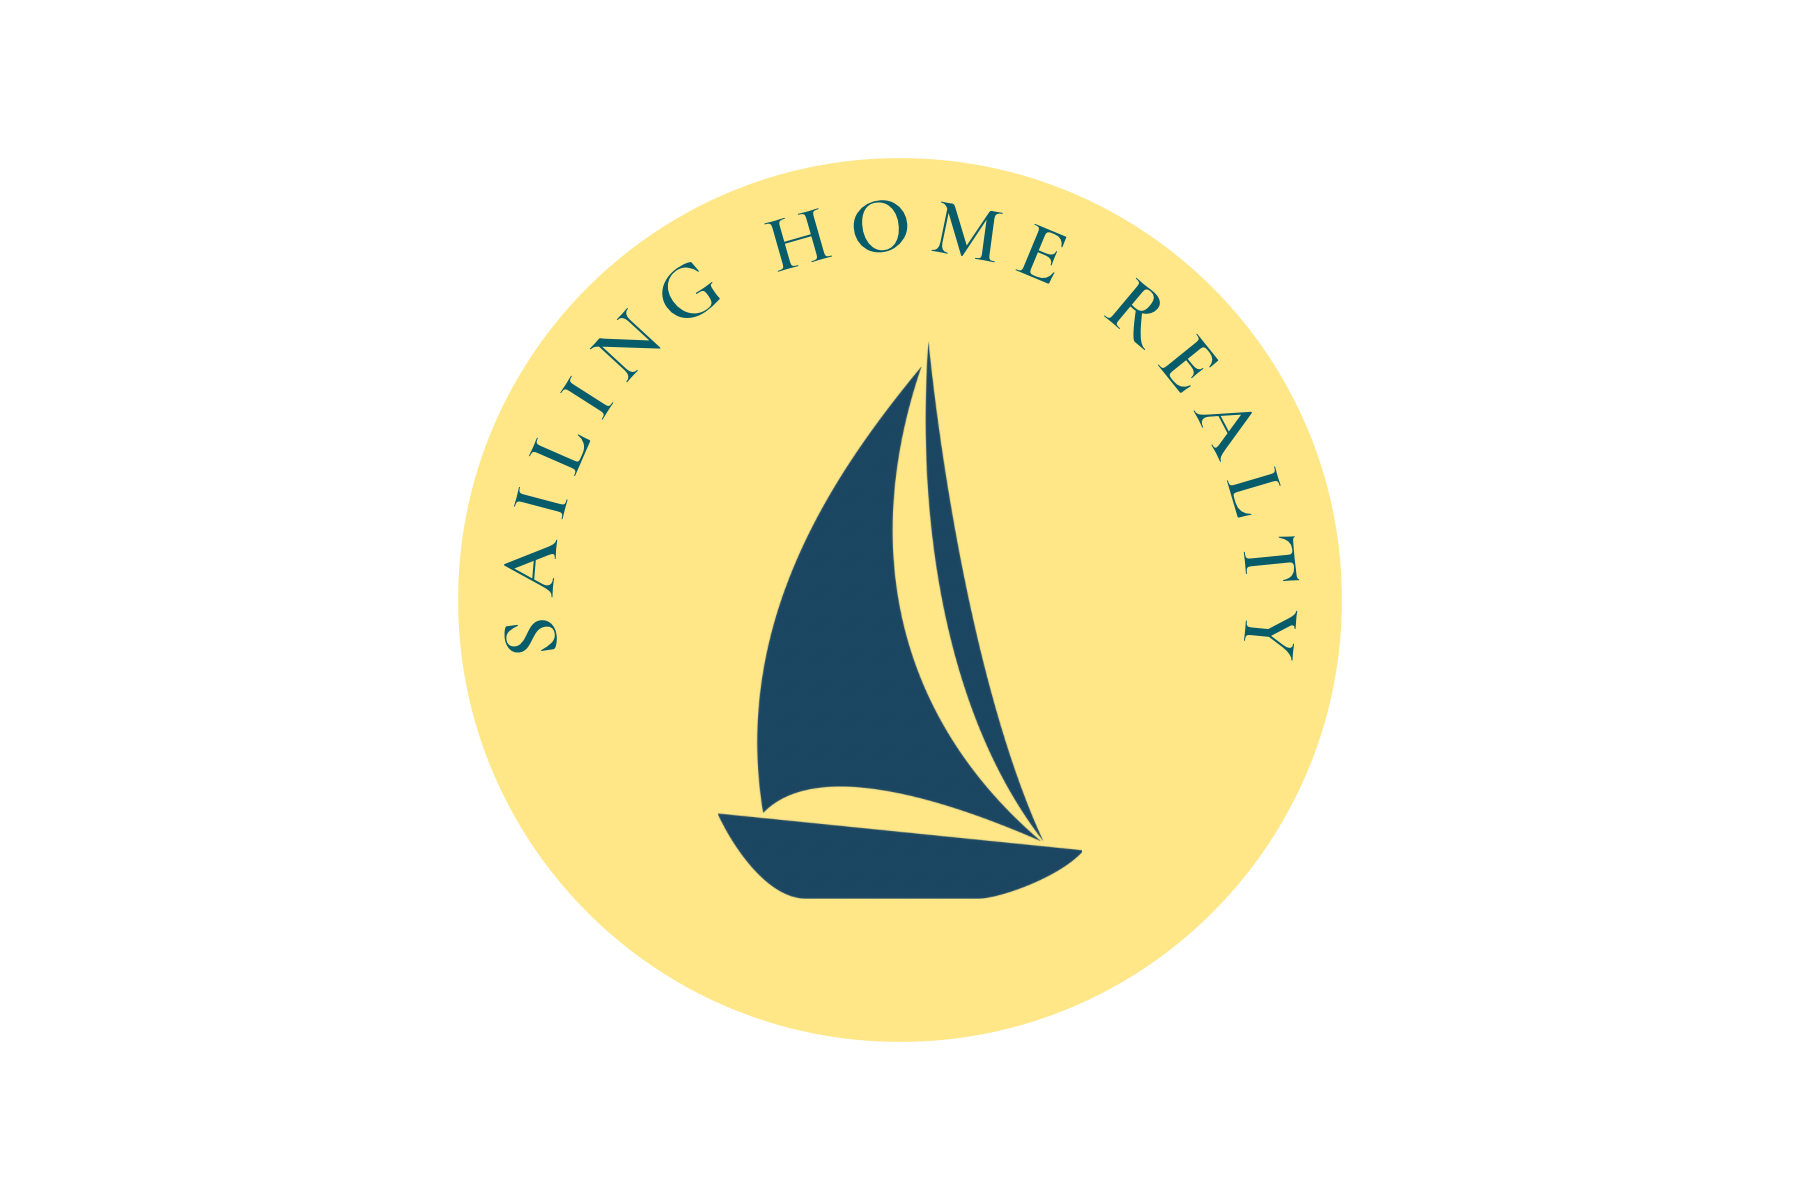 Sailing Home Realty